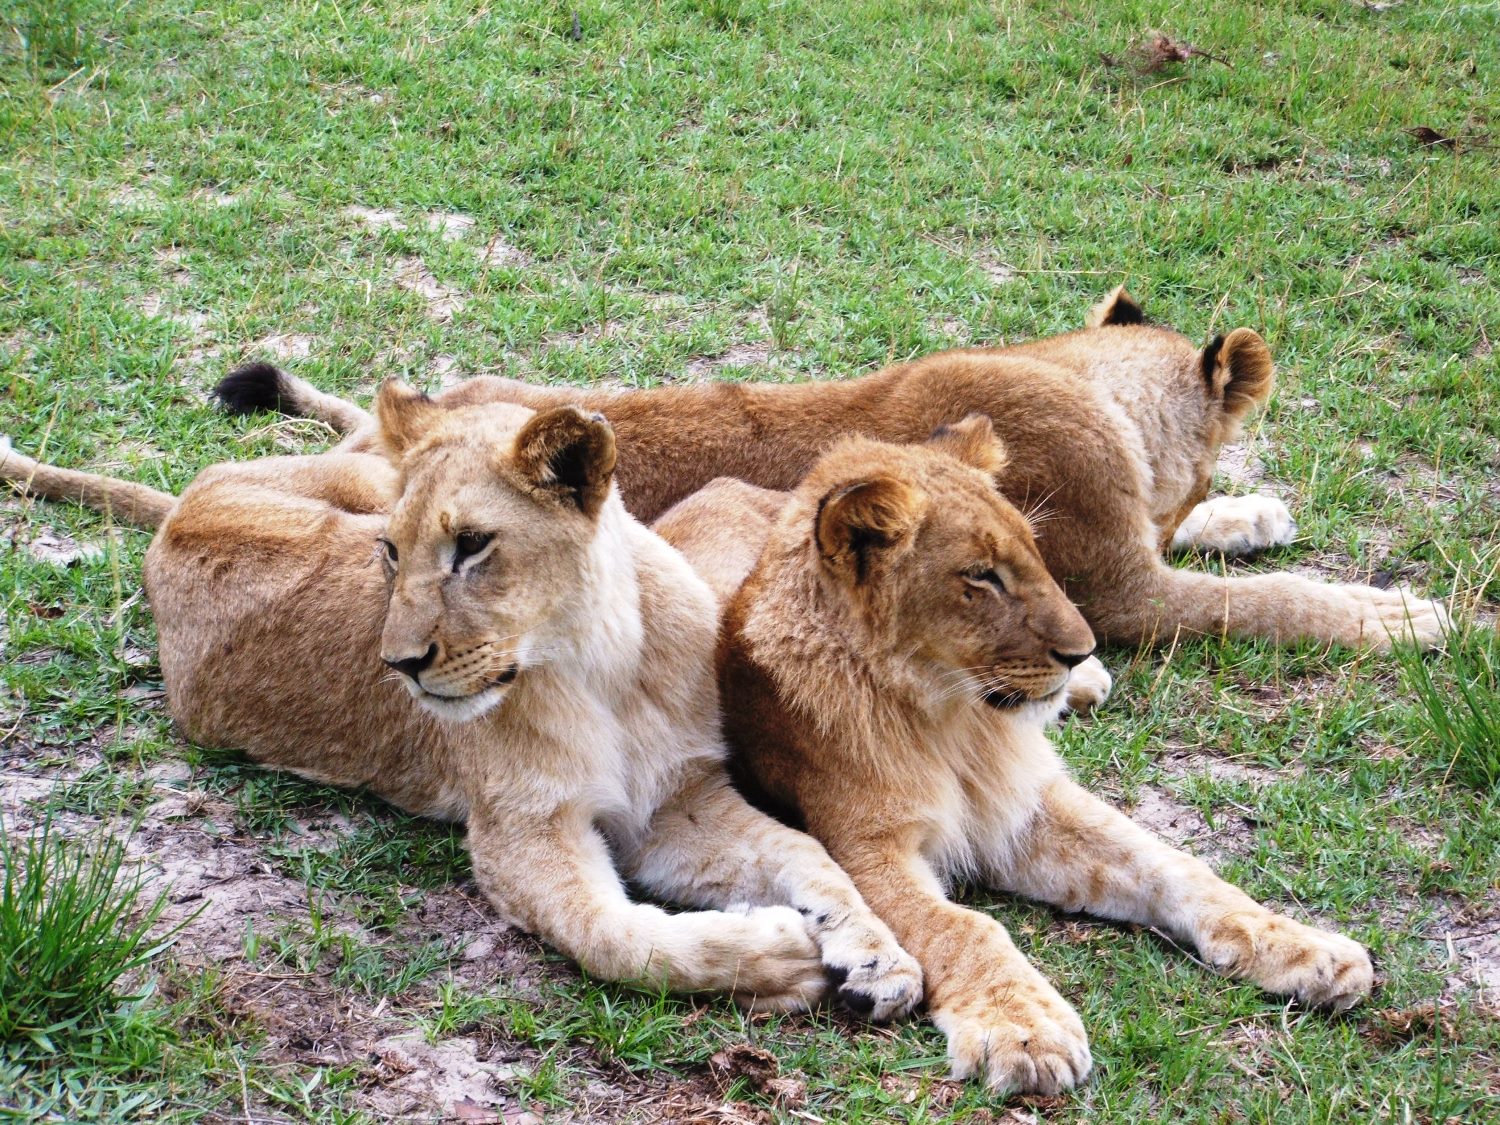  Lions in the rehabilitation phase of ALERT's reintroduction program.&nbsp;© Emma Dunston 